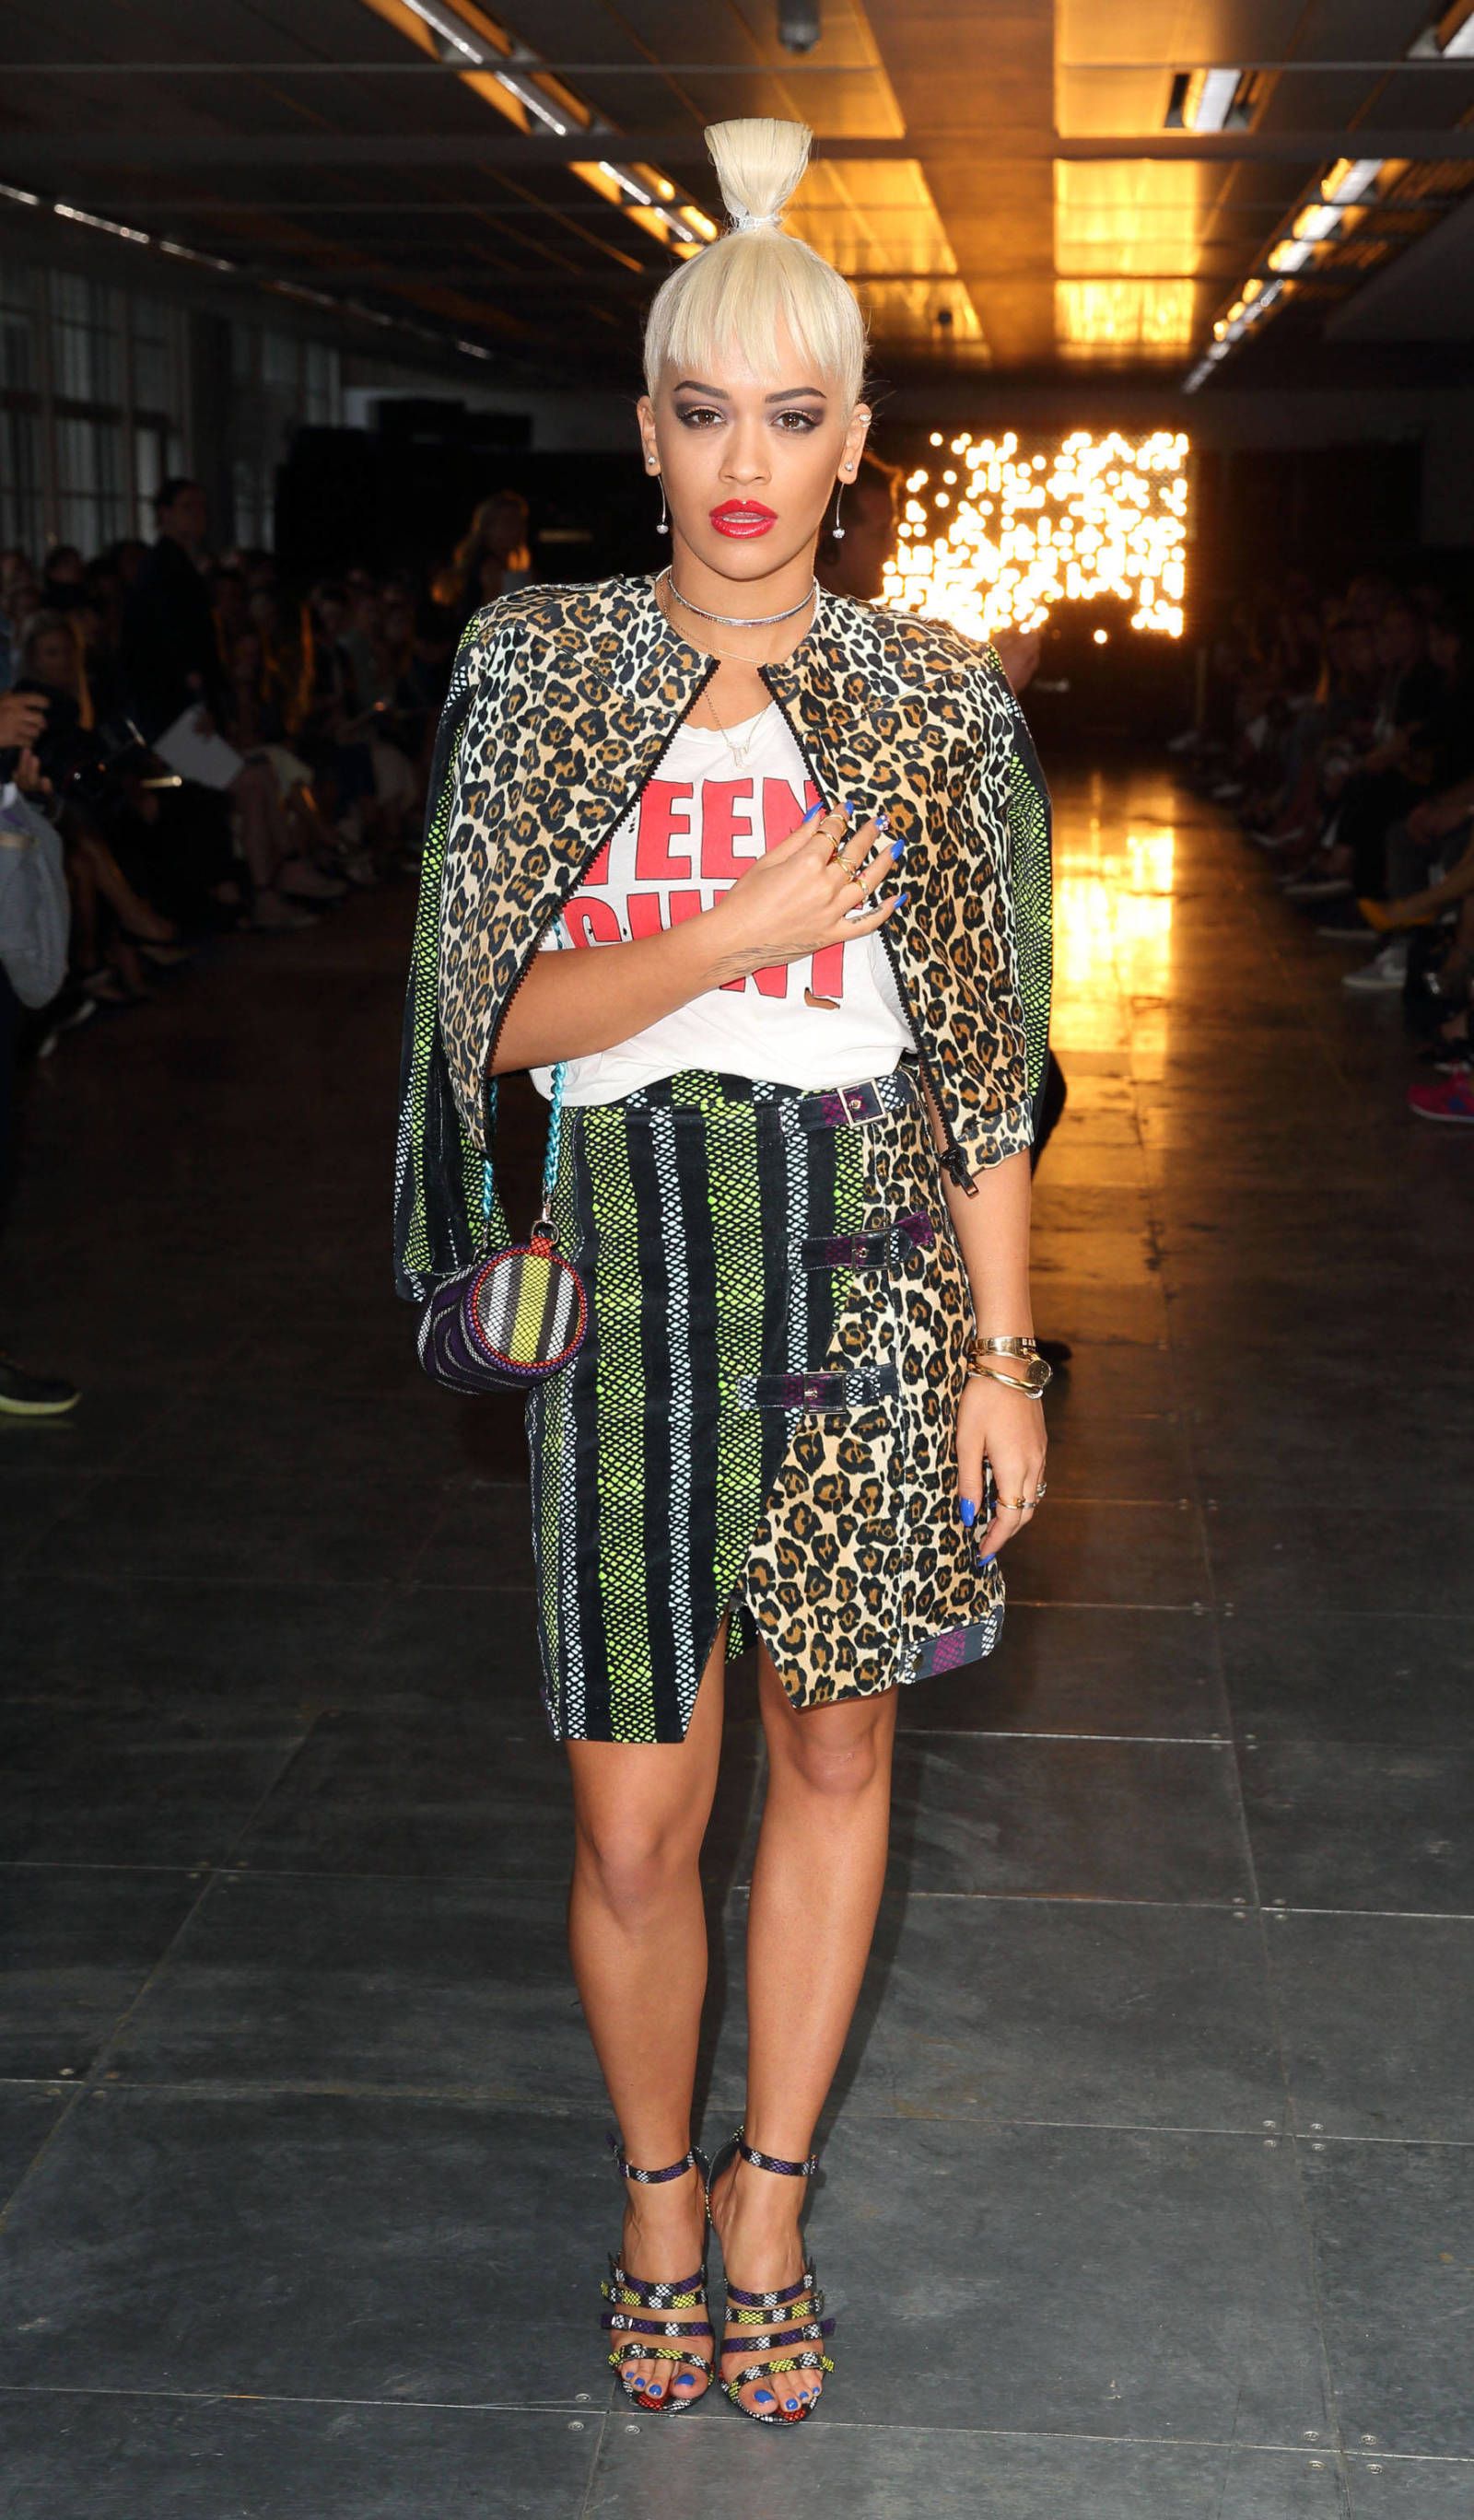 Rita Ora dons a 'cunt' t-shirt for London Fashion Week